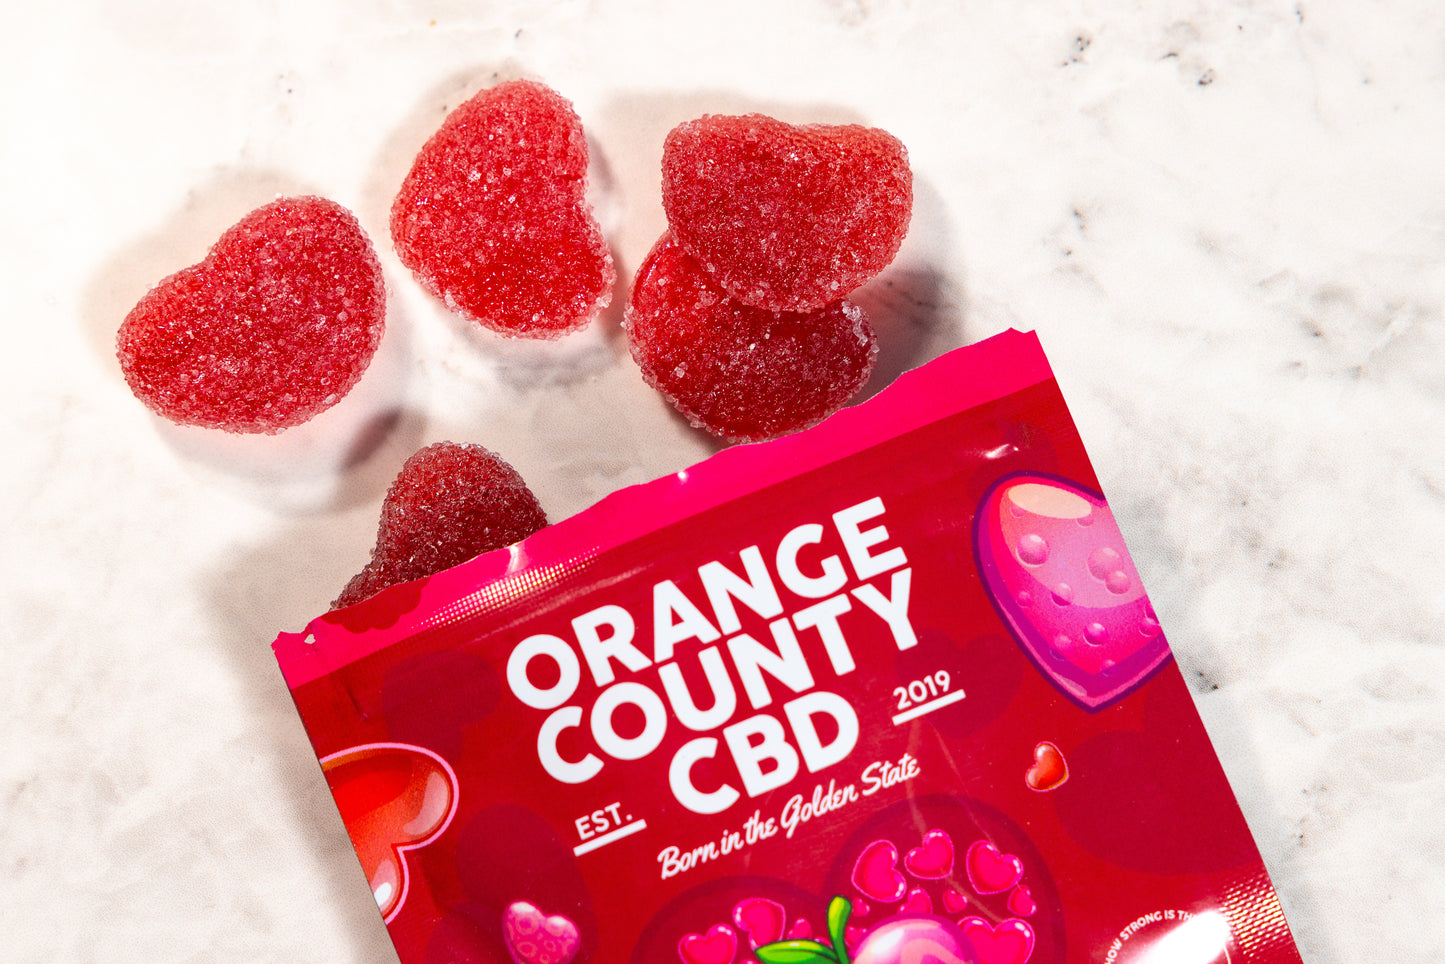 Vegan Friendly CBD Gummies by Orange County CBD Award Winning dispensary